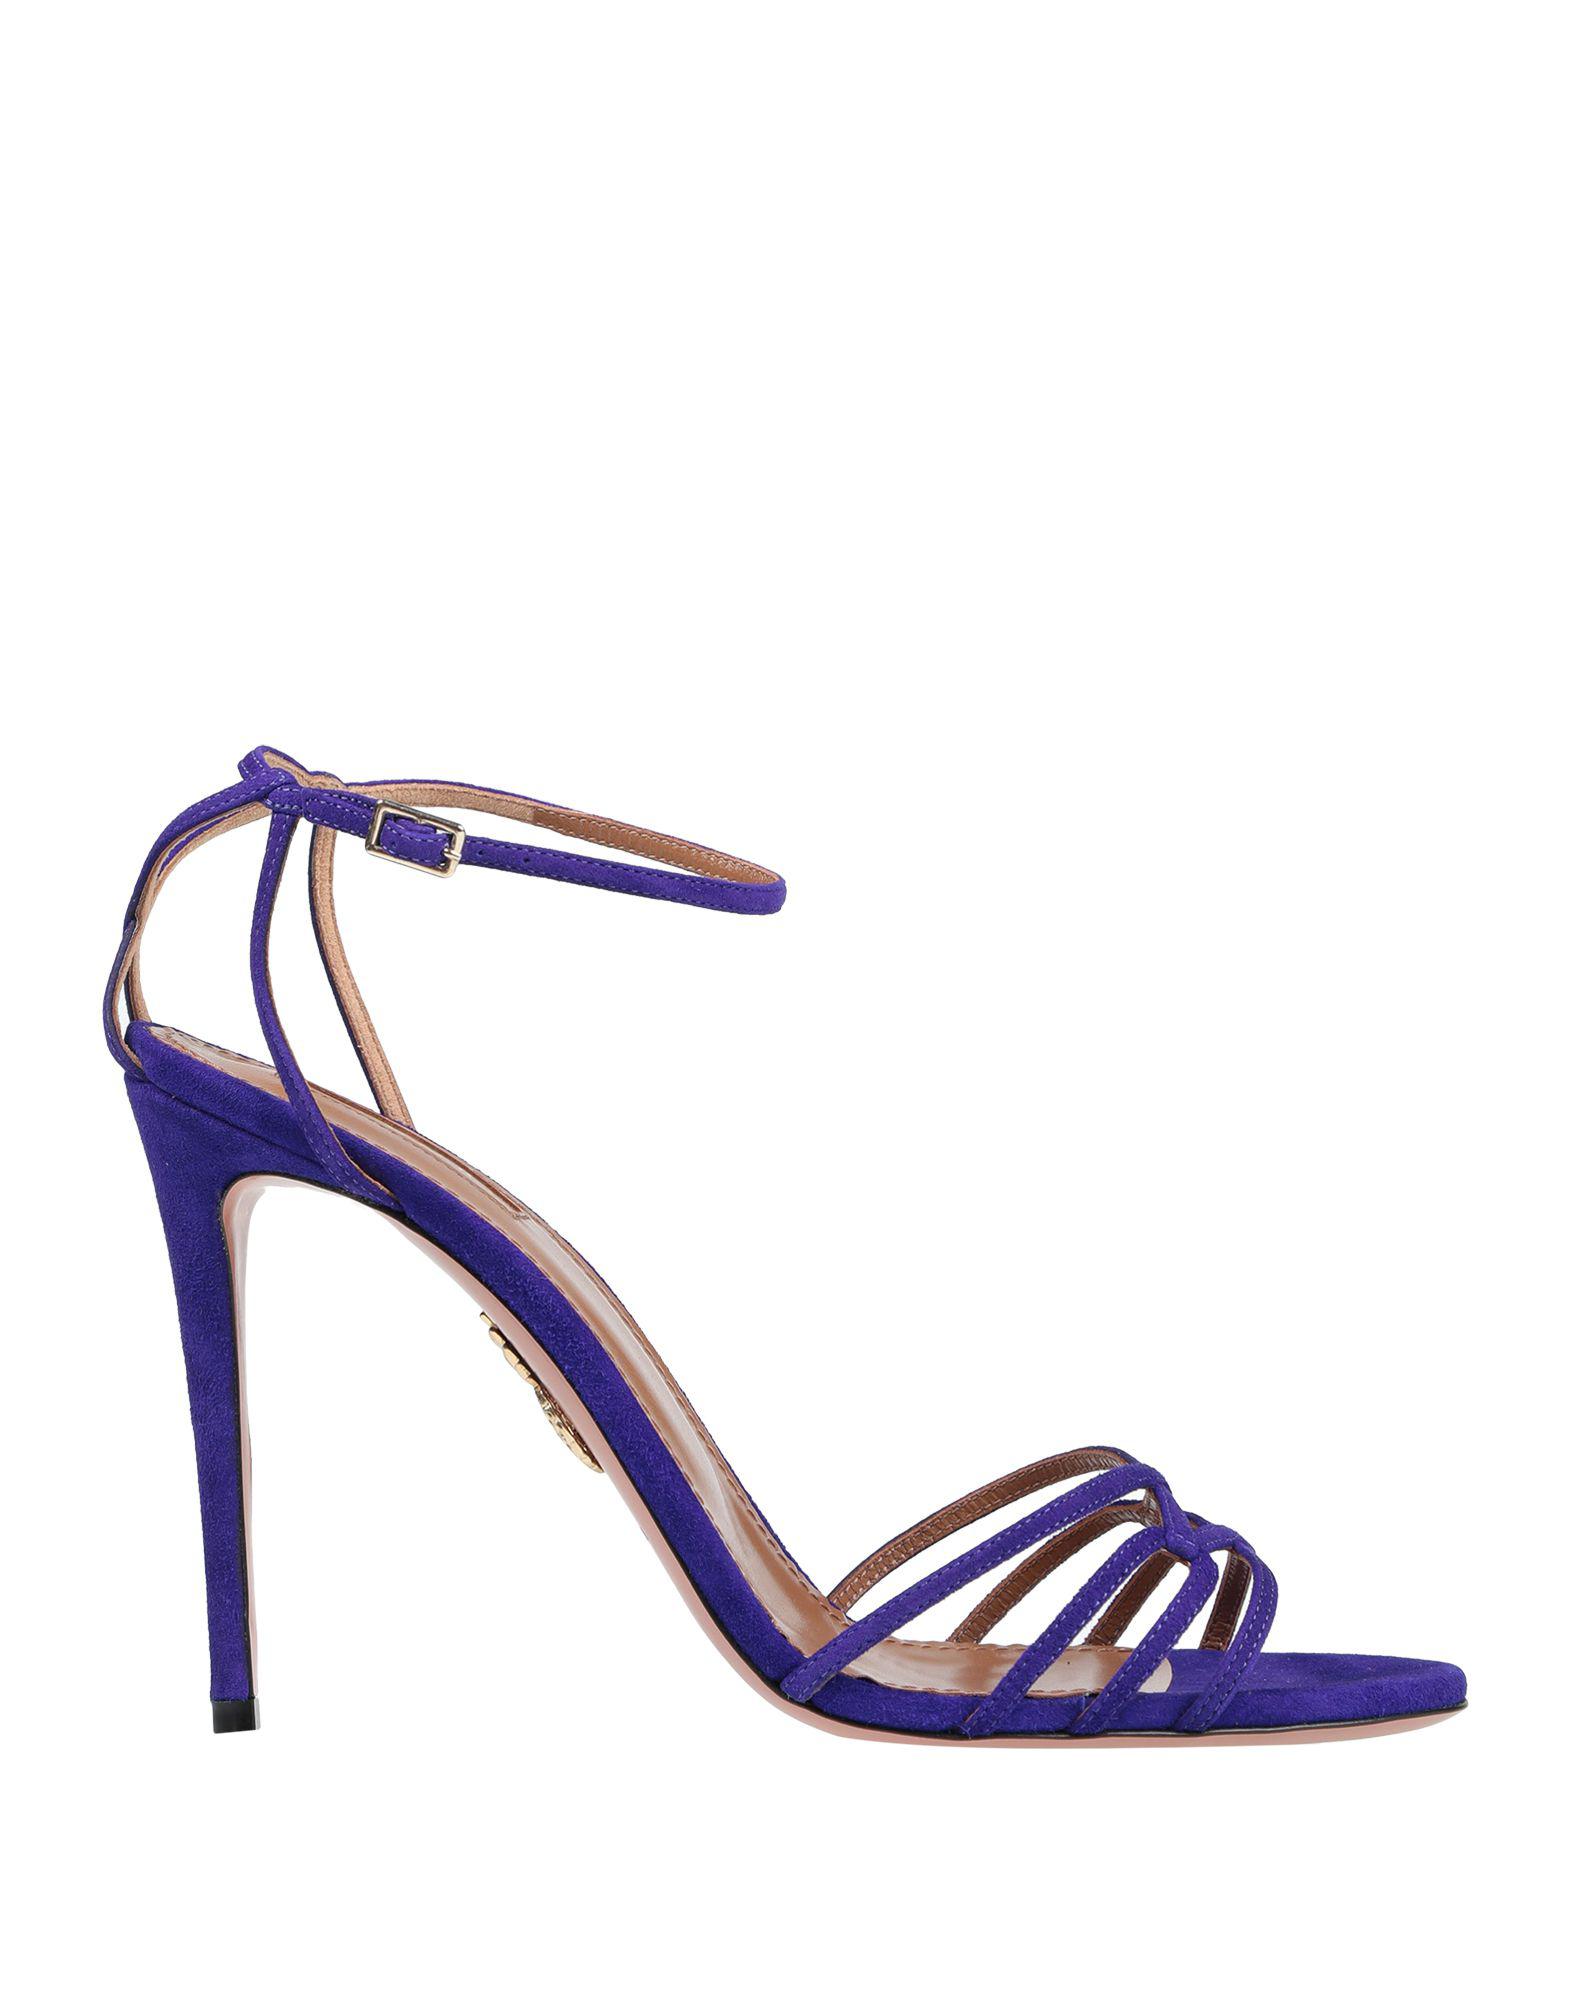 dark purple sandal heels